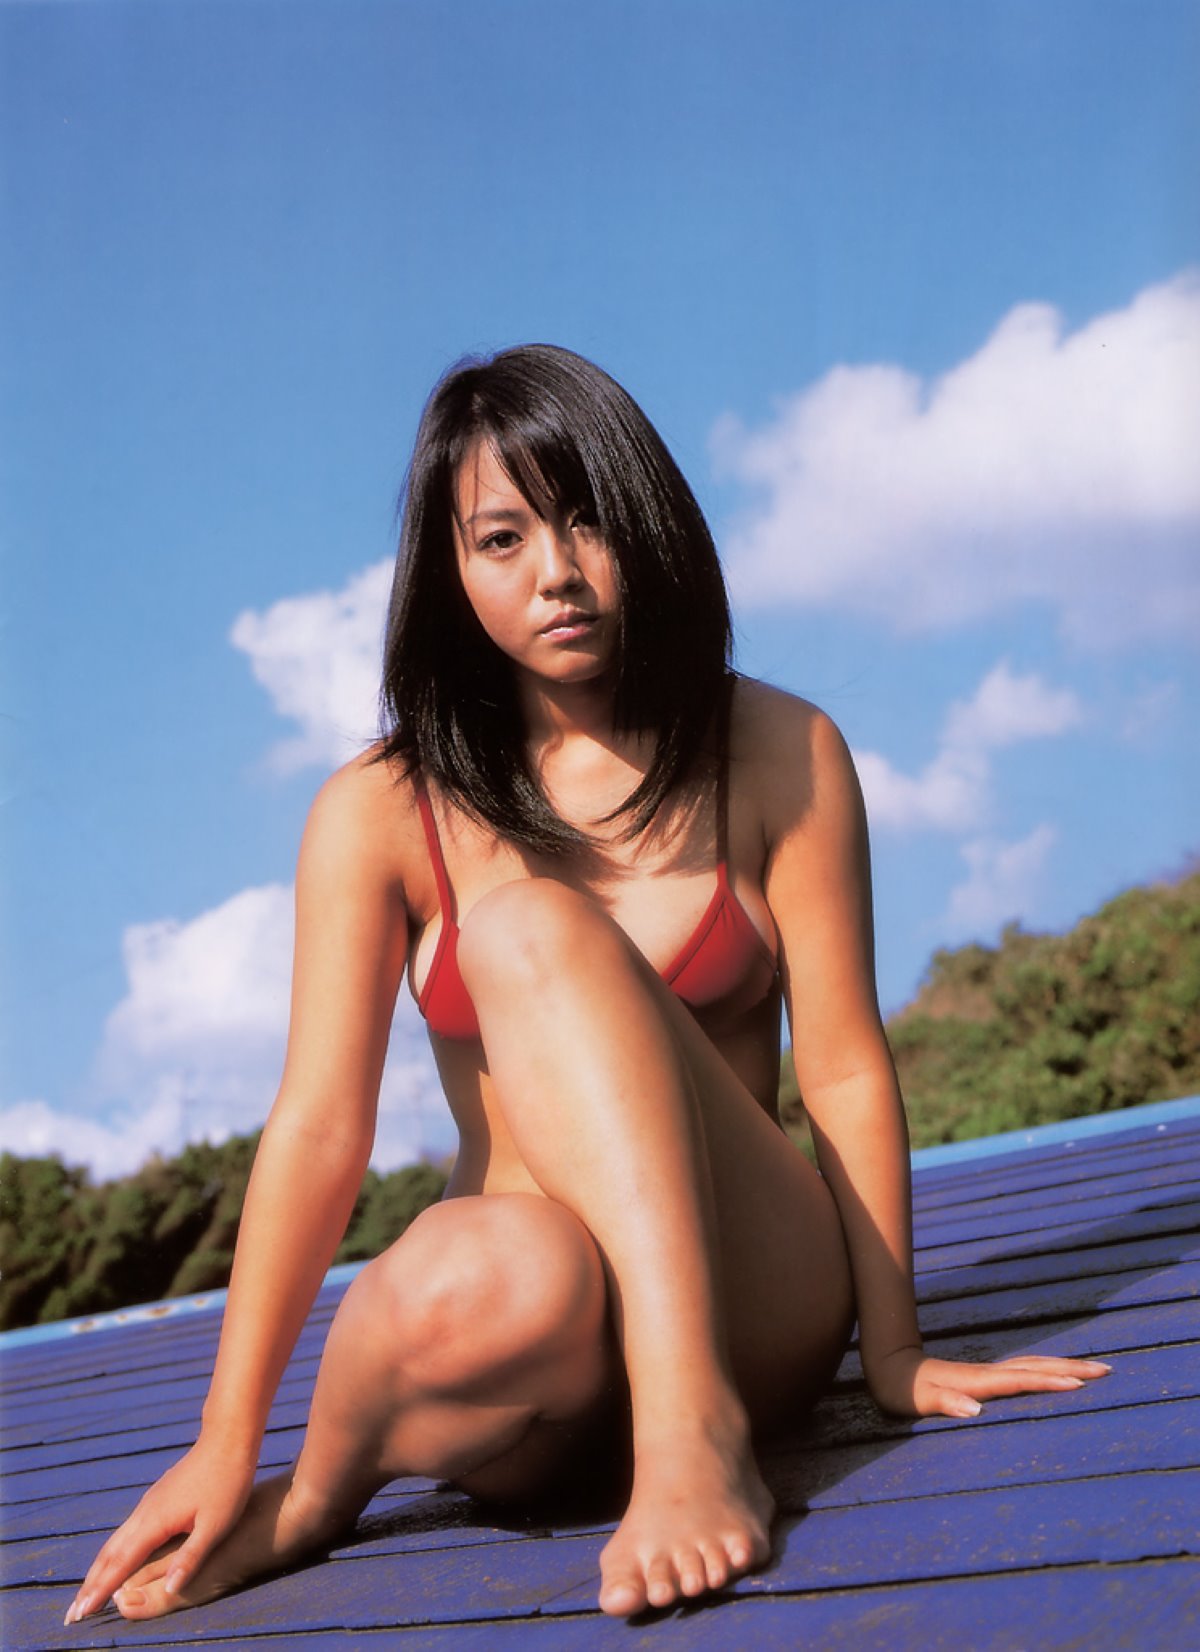 Photobook Sayaka Isoyama 磯山さやか Playing With An Island Girl 0005 5271781764.jpg